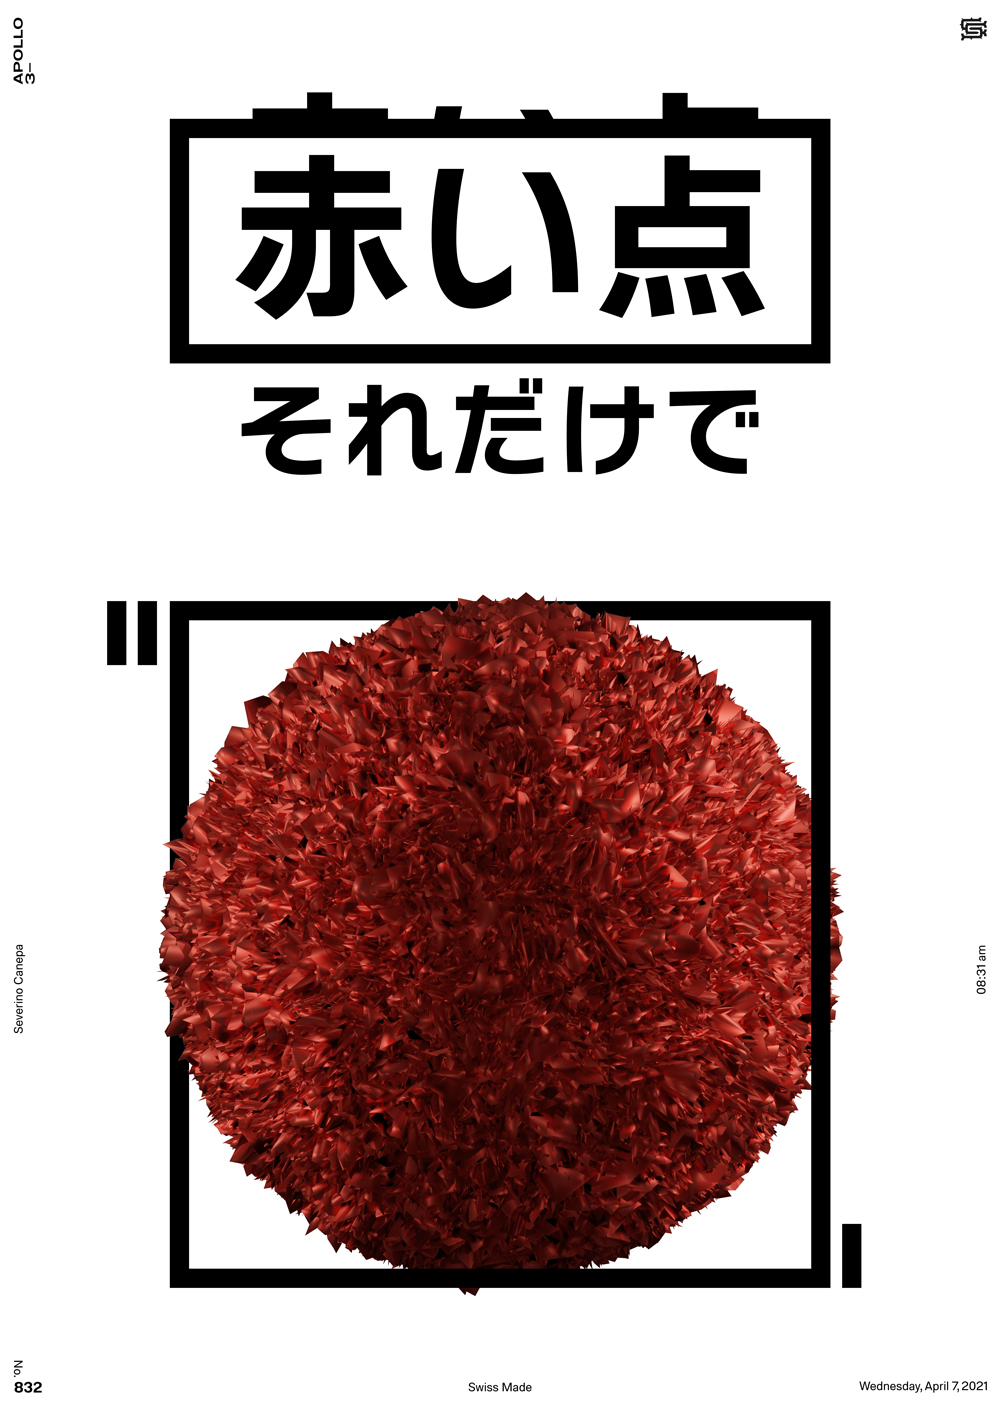 Minimalist digital art with Japanese writing and geometric shapes